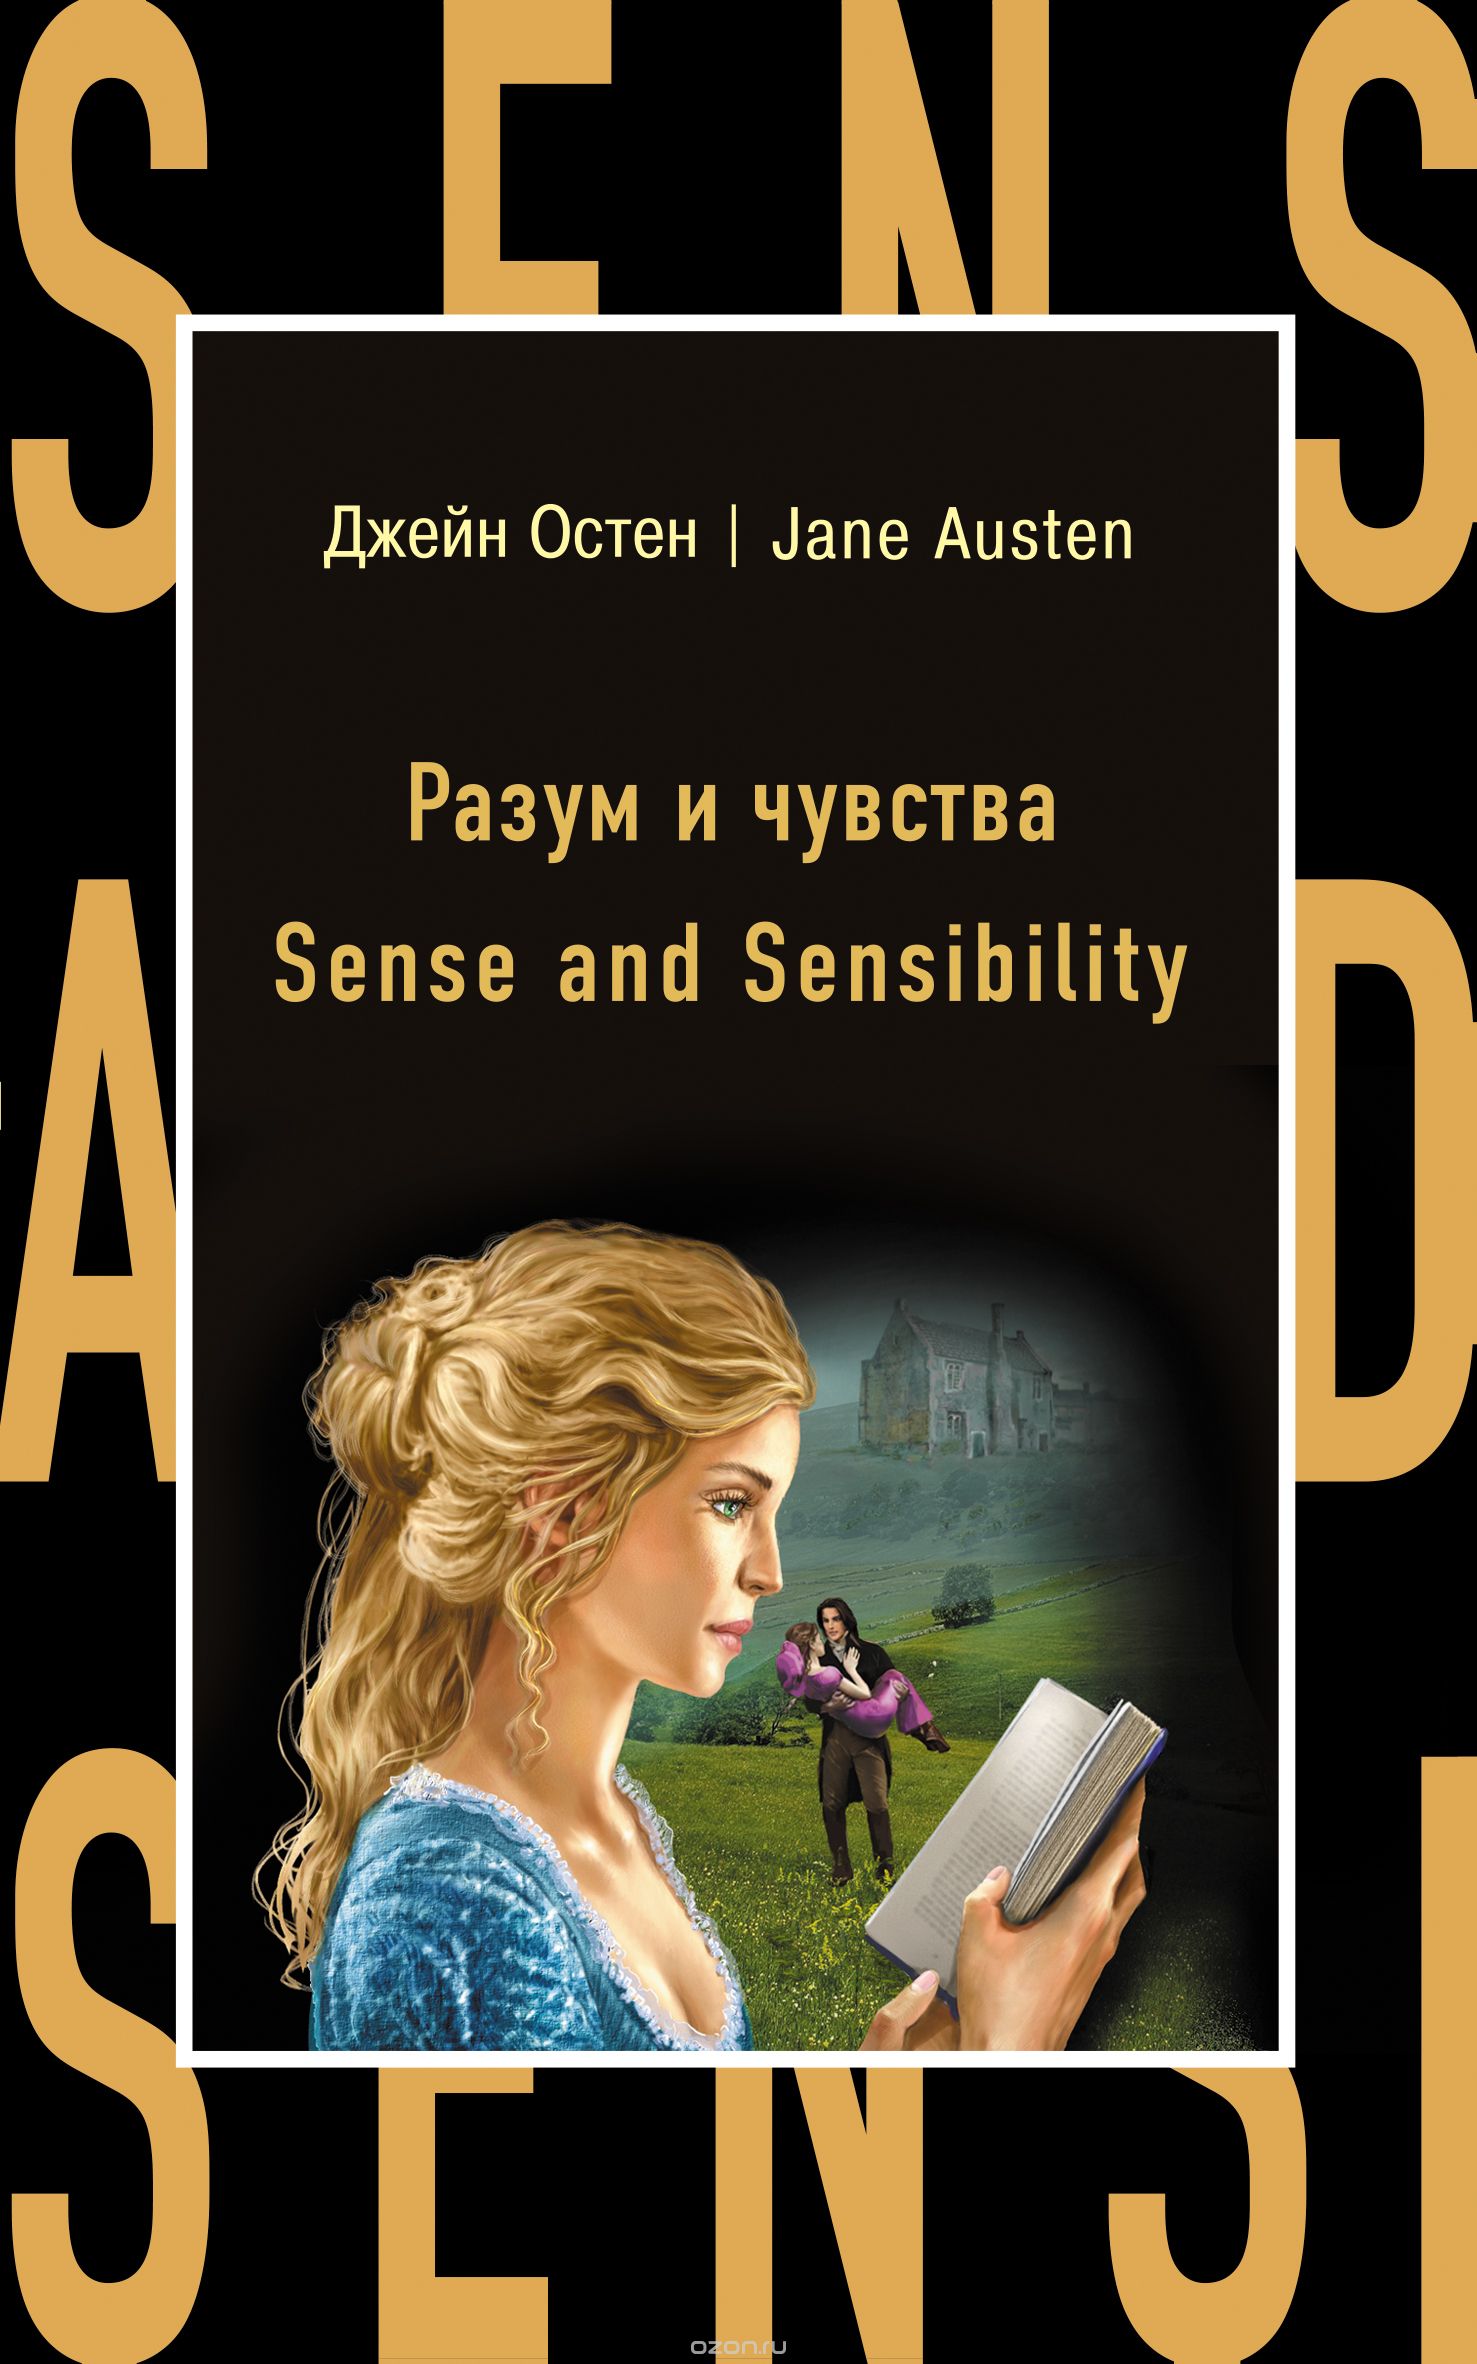 Скачать книгу "Разум и чувства = Sense and Sensibility, Остен Джейн"